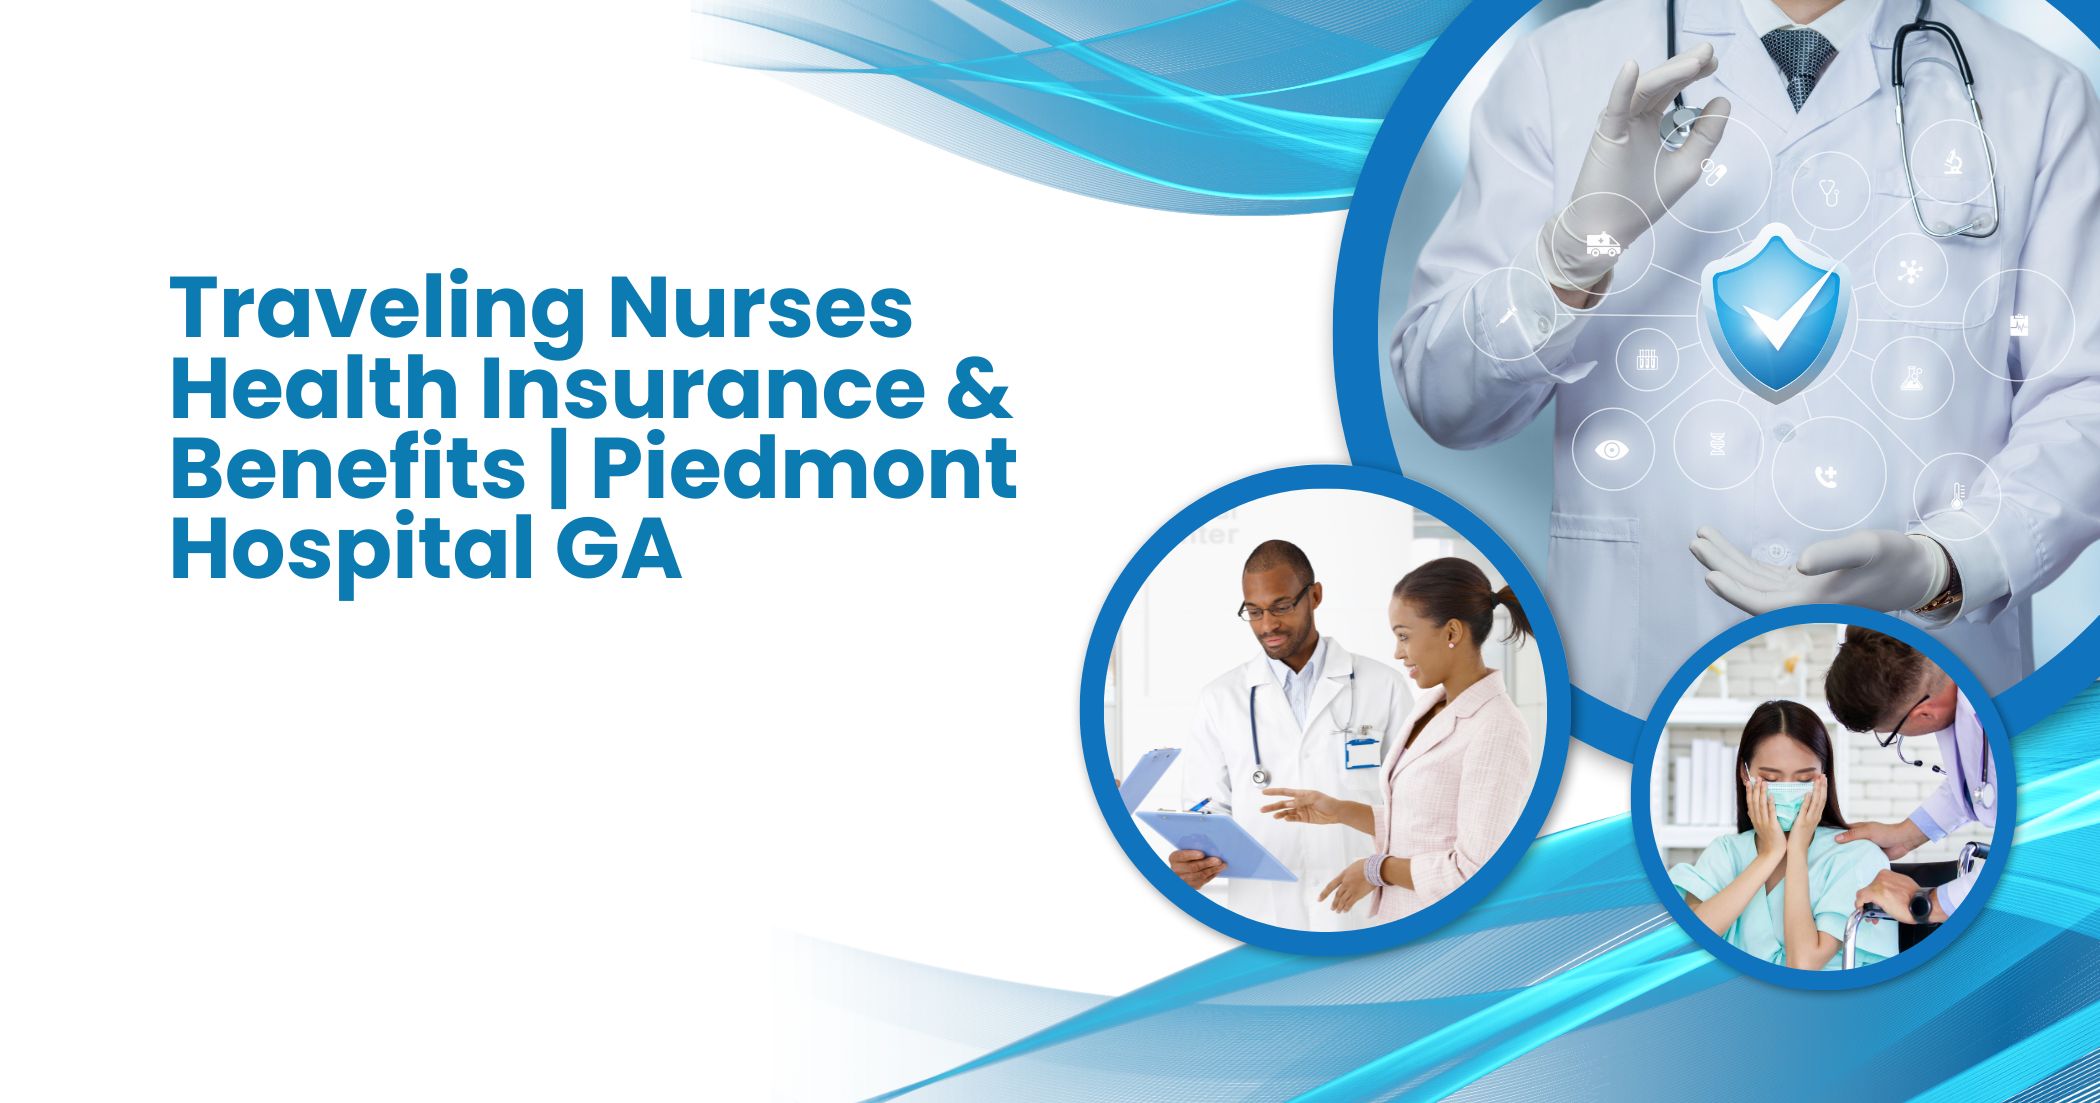 Traveling Nurses Health Insurance & Benefits Piedmont Hospital GA